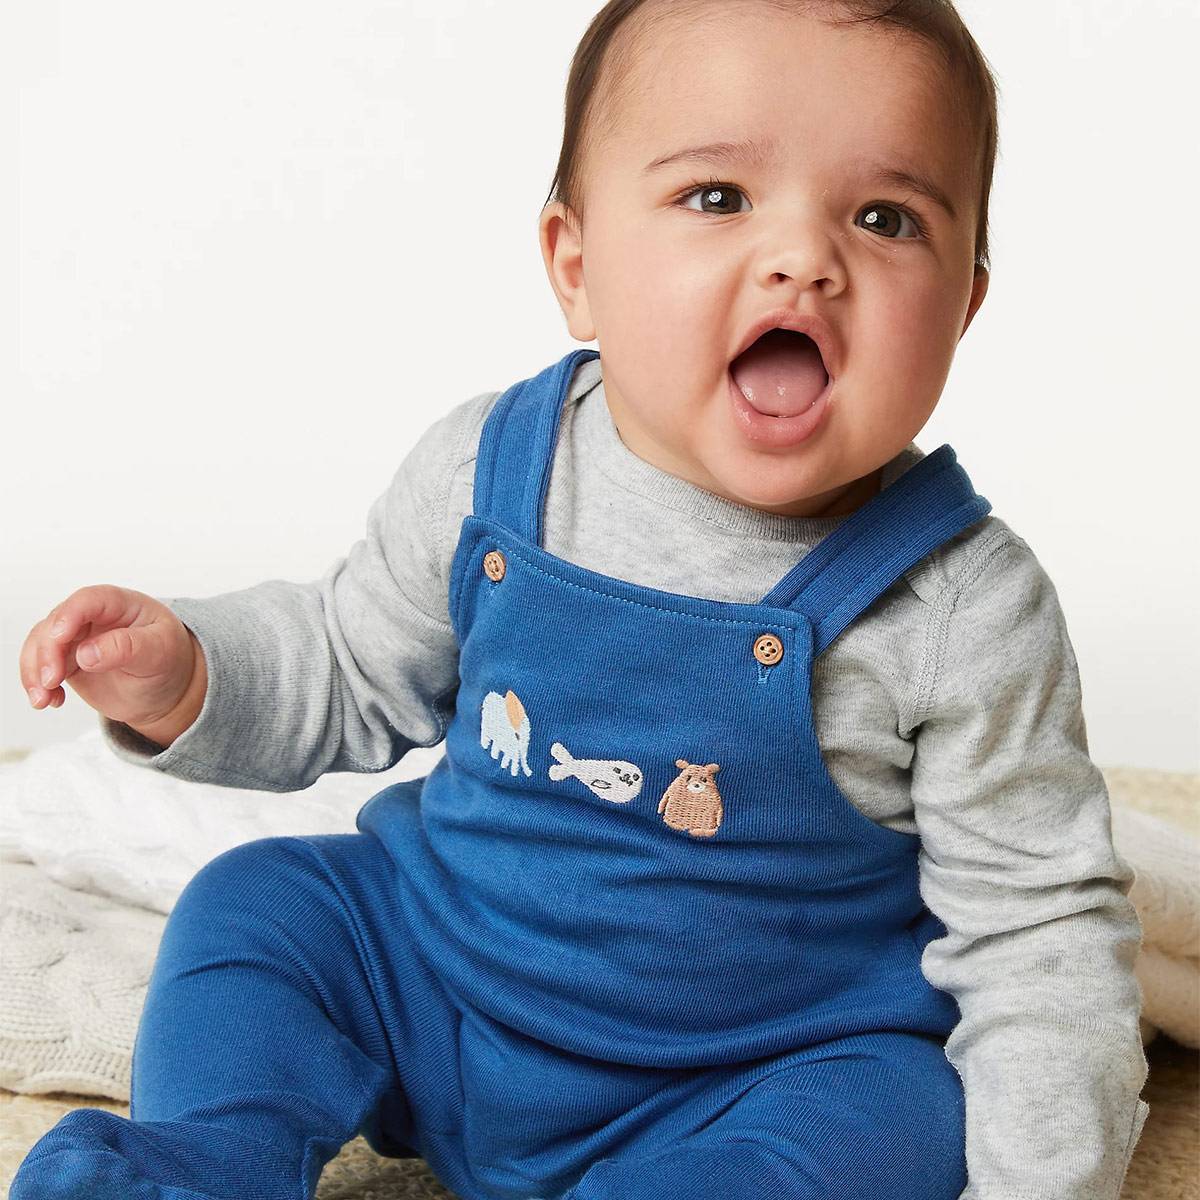 Baby boy wearing dungarees